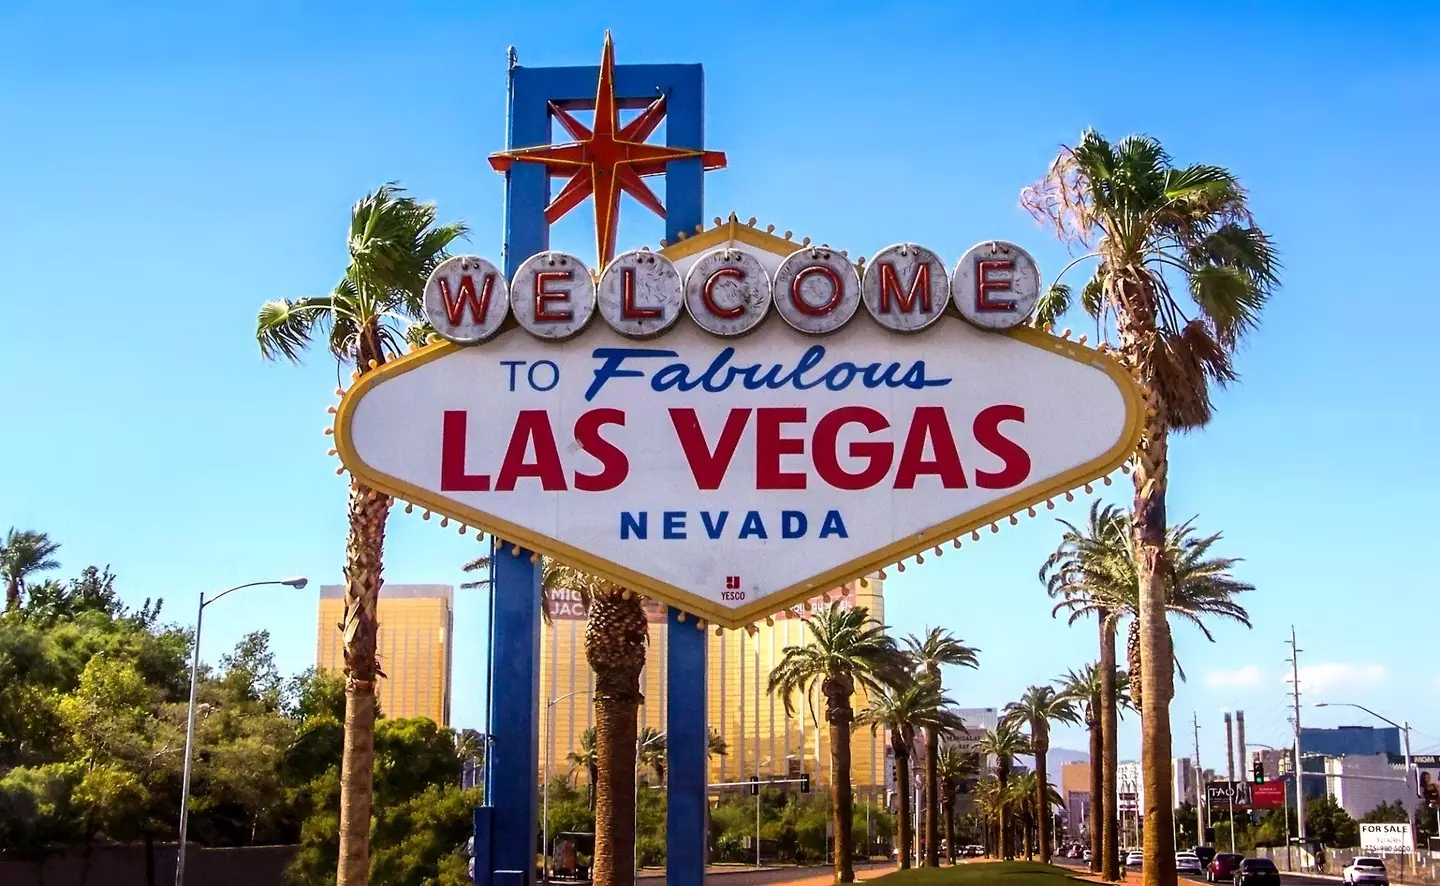 Trip to Vegas, anyone?